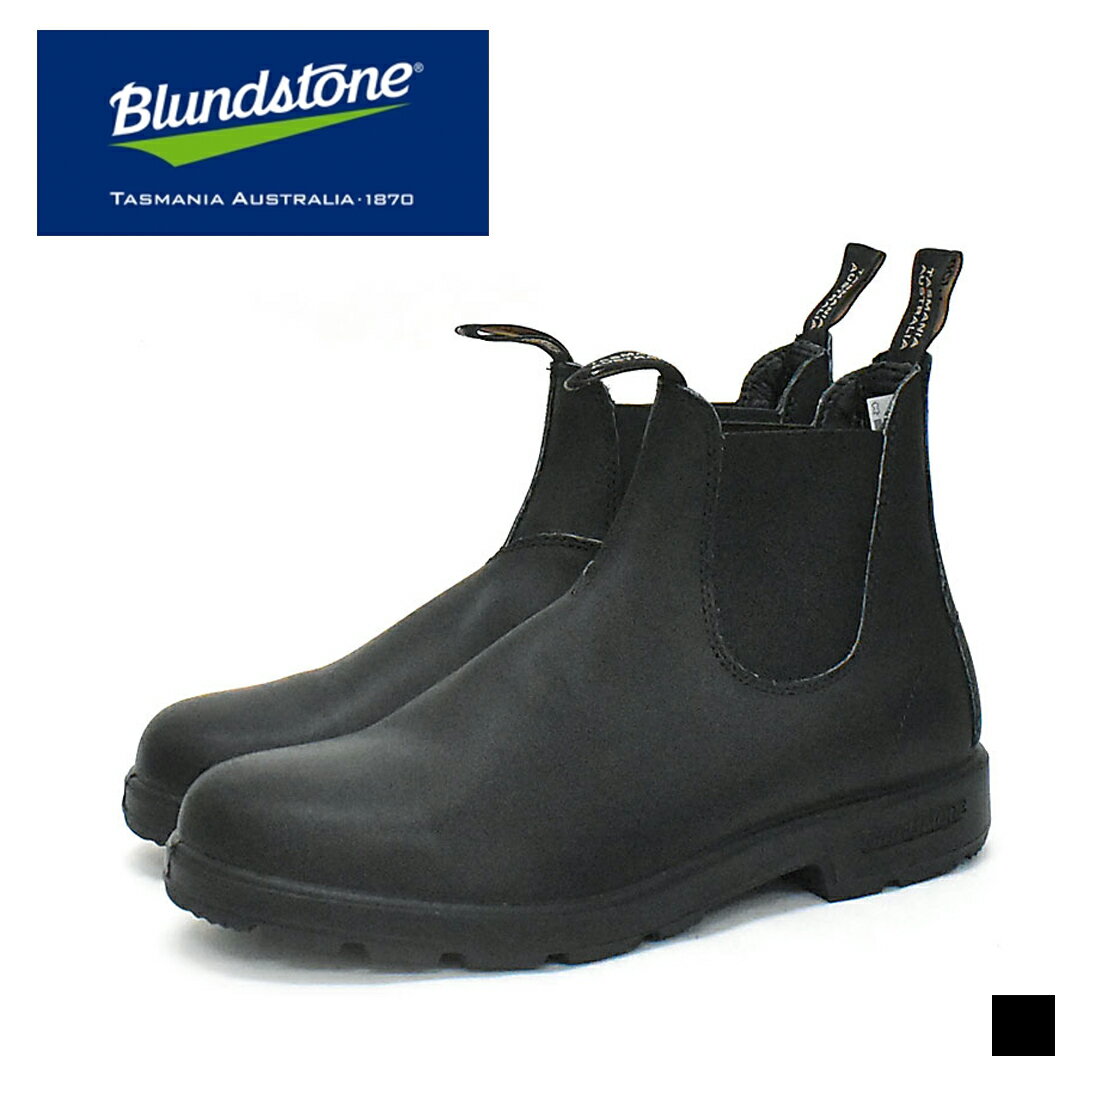 Blundstone ブランドストーン メンズ レインブーツ ショートブーツ 晴雨兼用 ブラック 防水 耐久性 全天候対応 銀座ワシントン WASH ウォッシュ